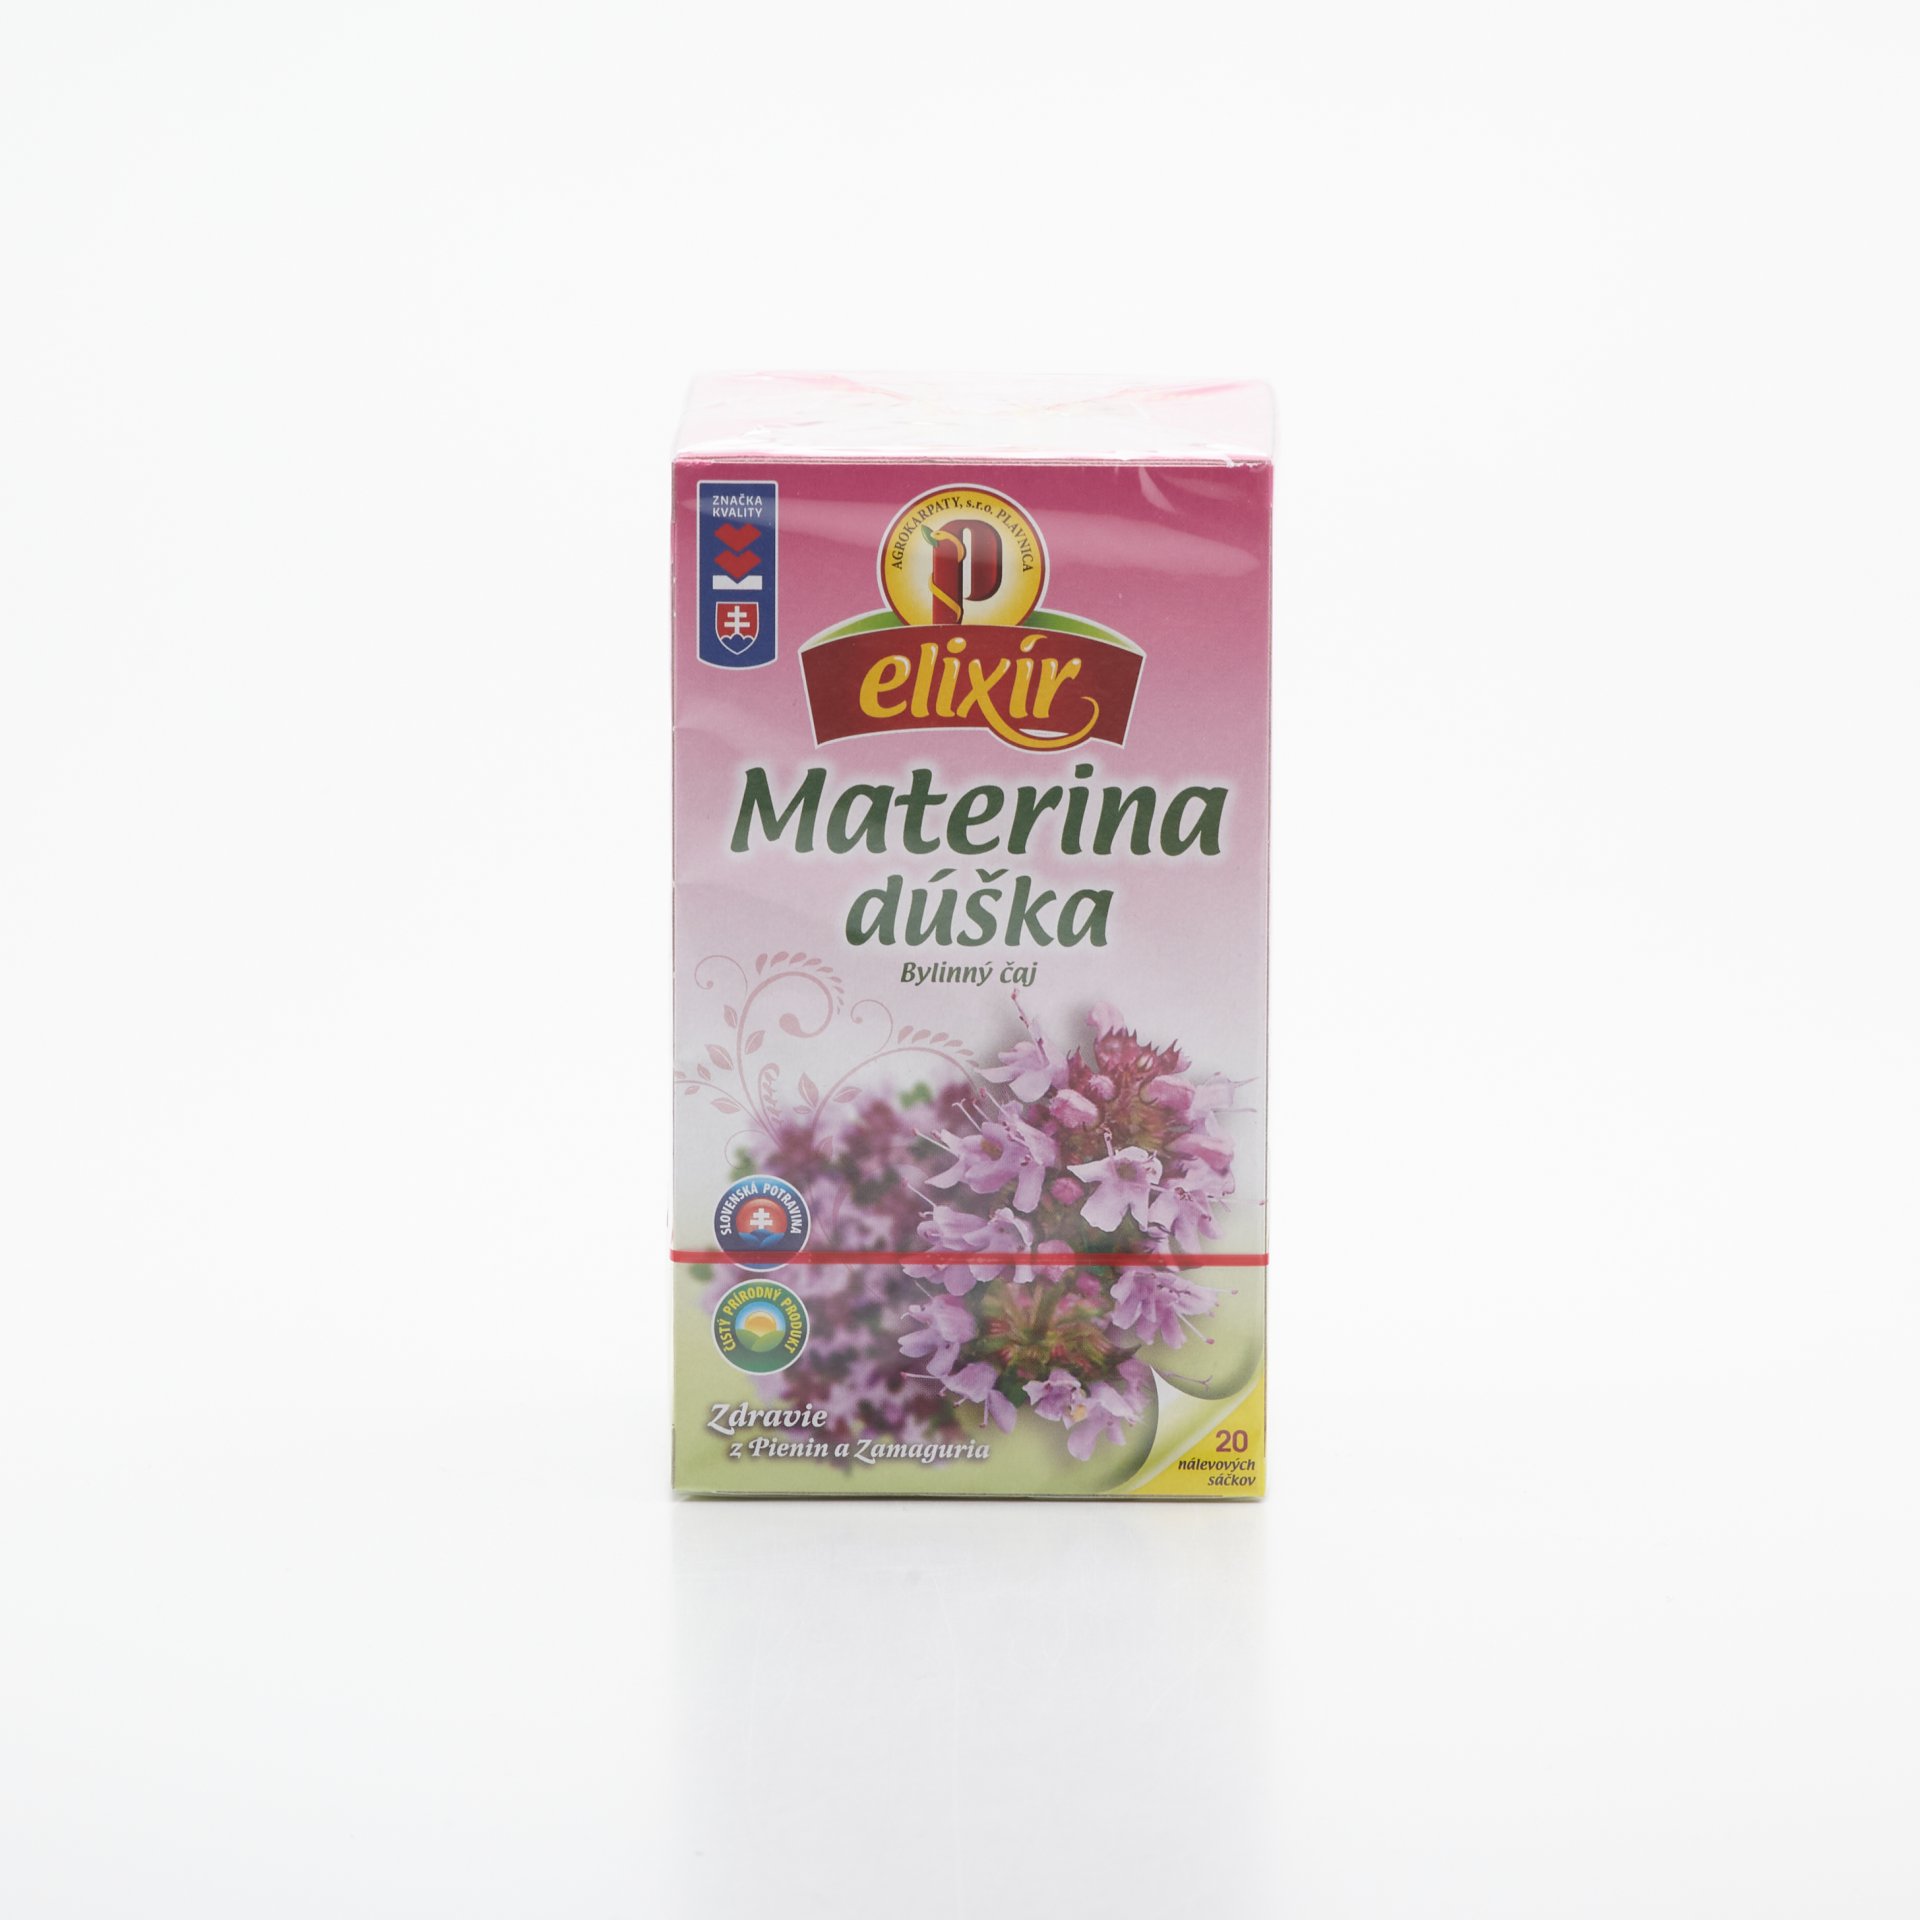 ELIXÍR - MATERINA DÚŠKA -bylinný čaj 30g